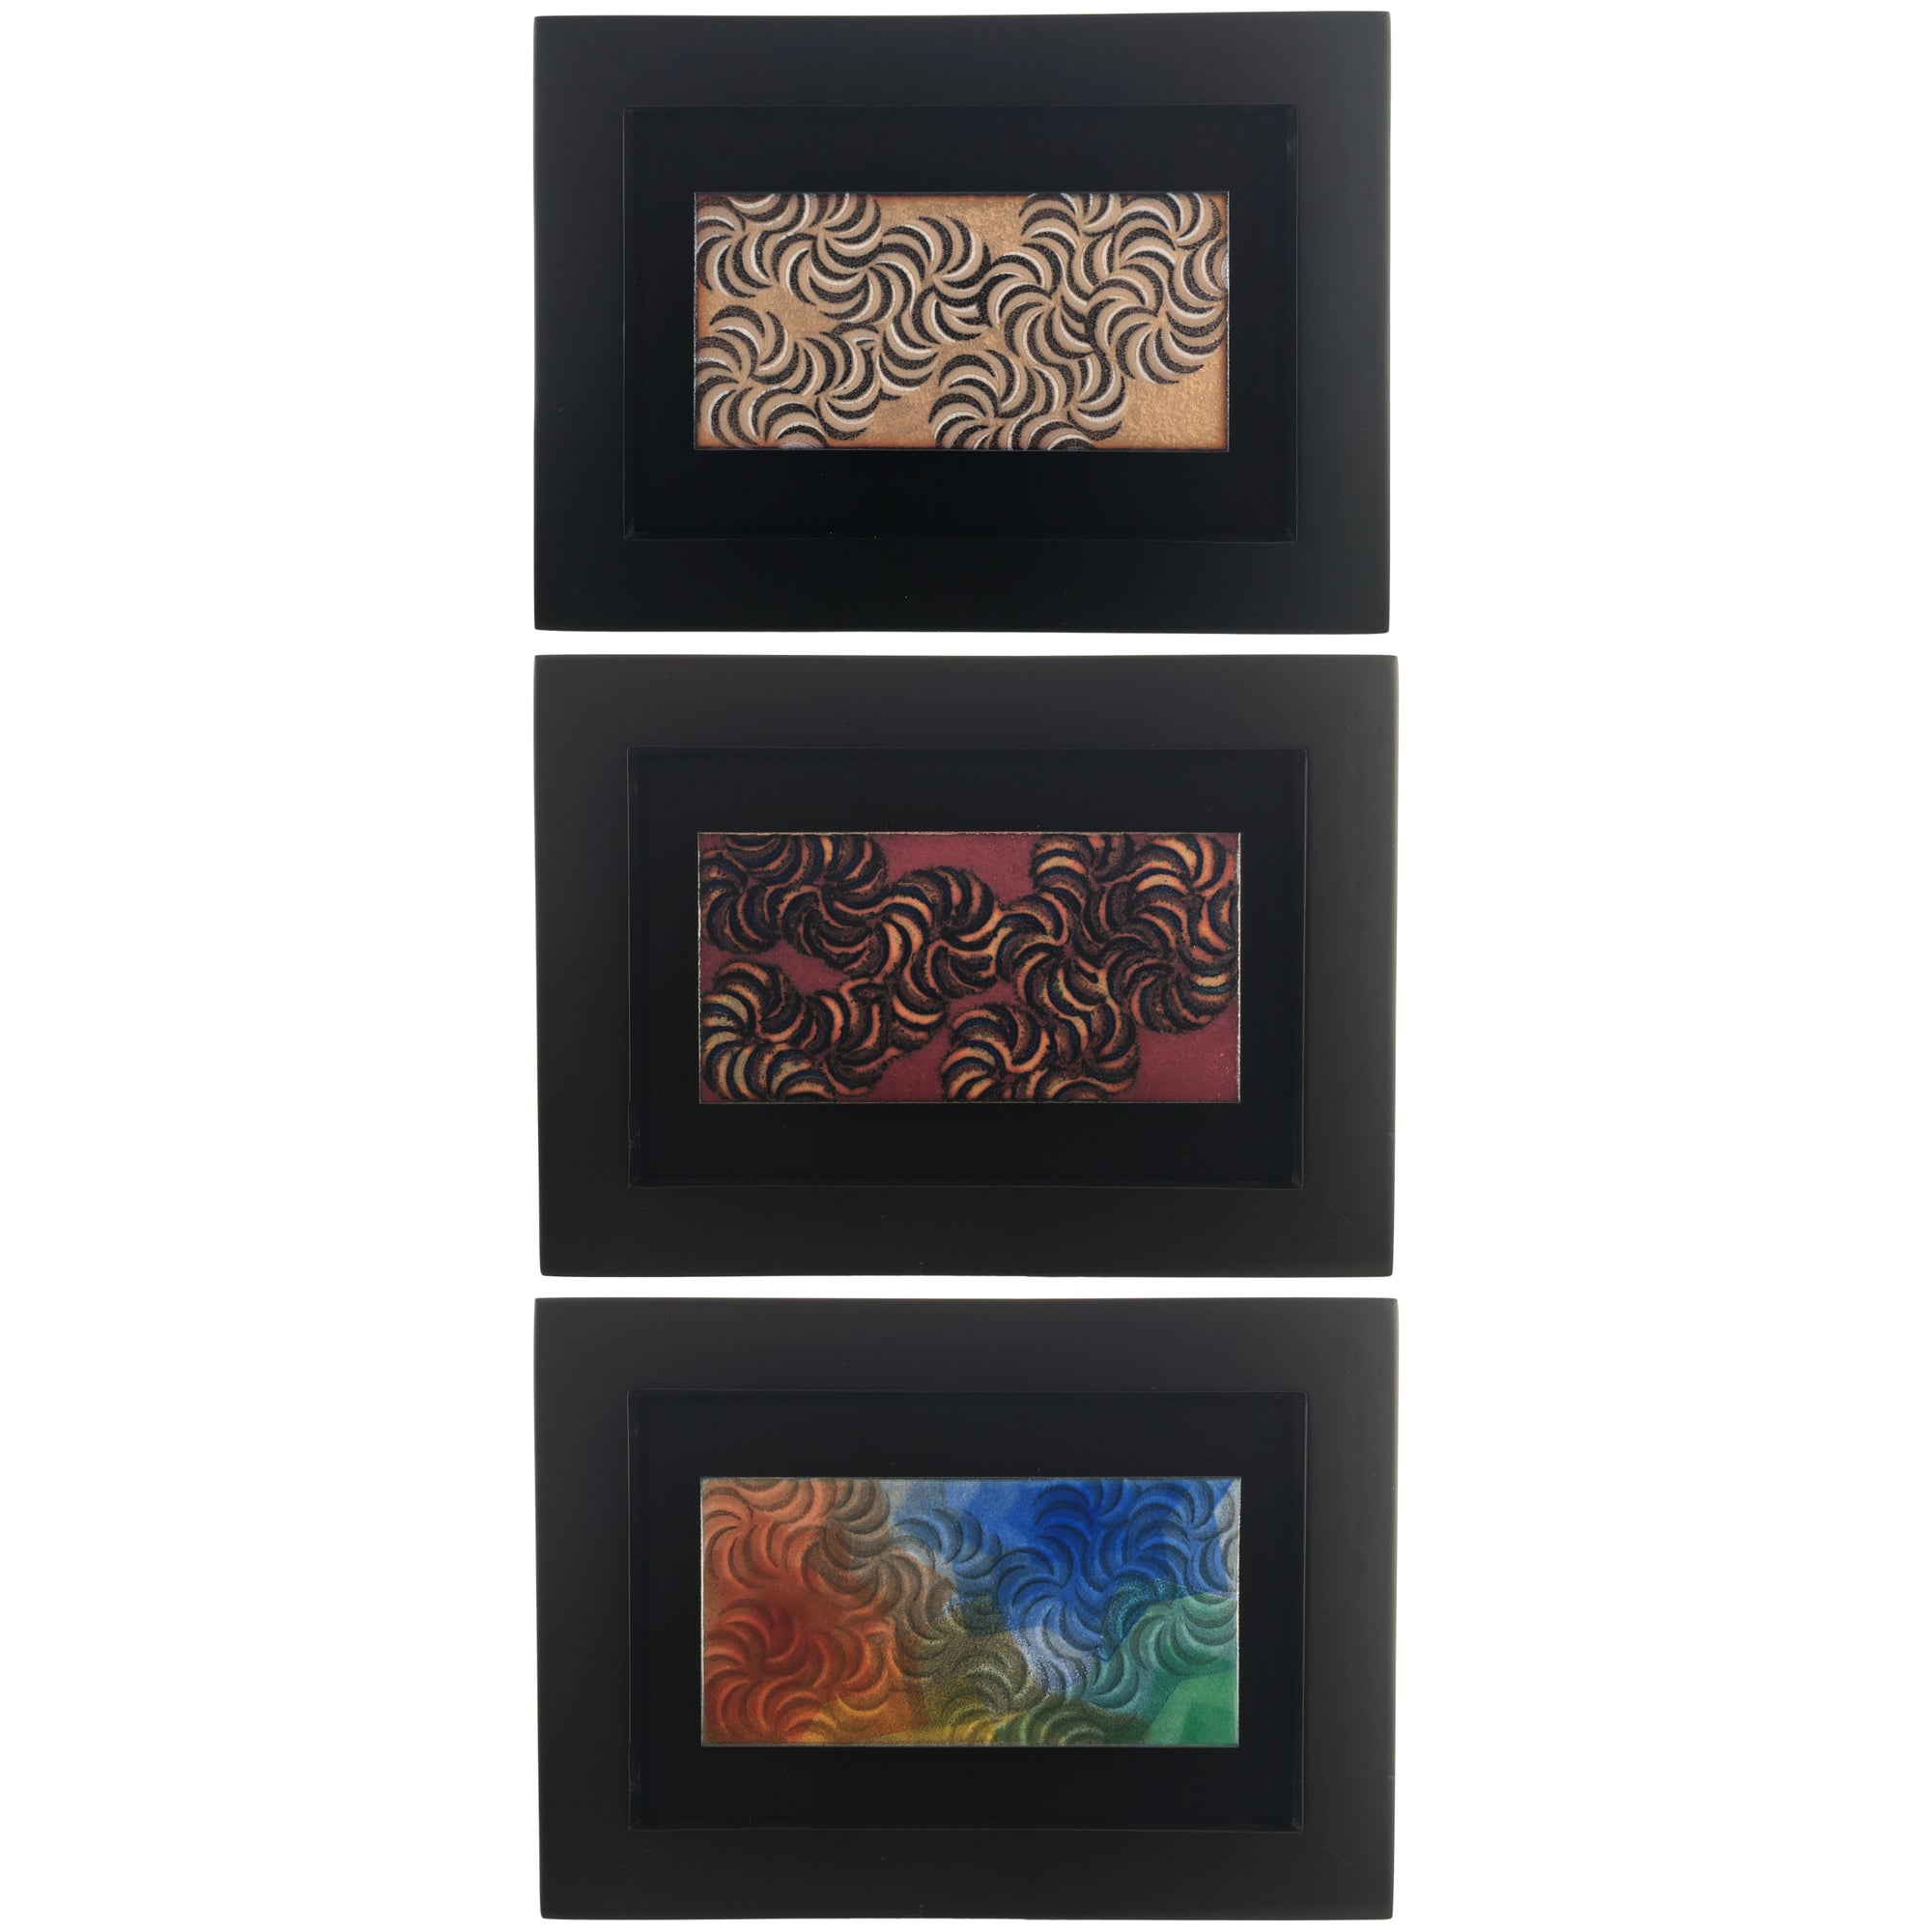 Camille Patton Kinetic Series Set of Three Vitreous Enamel Framed Wall Art